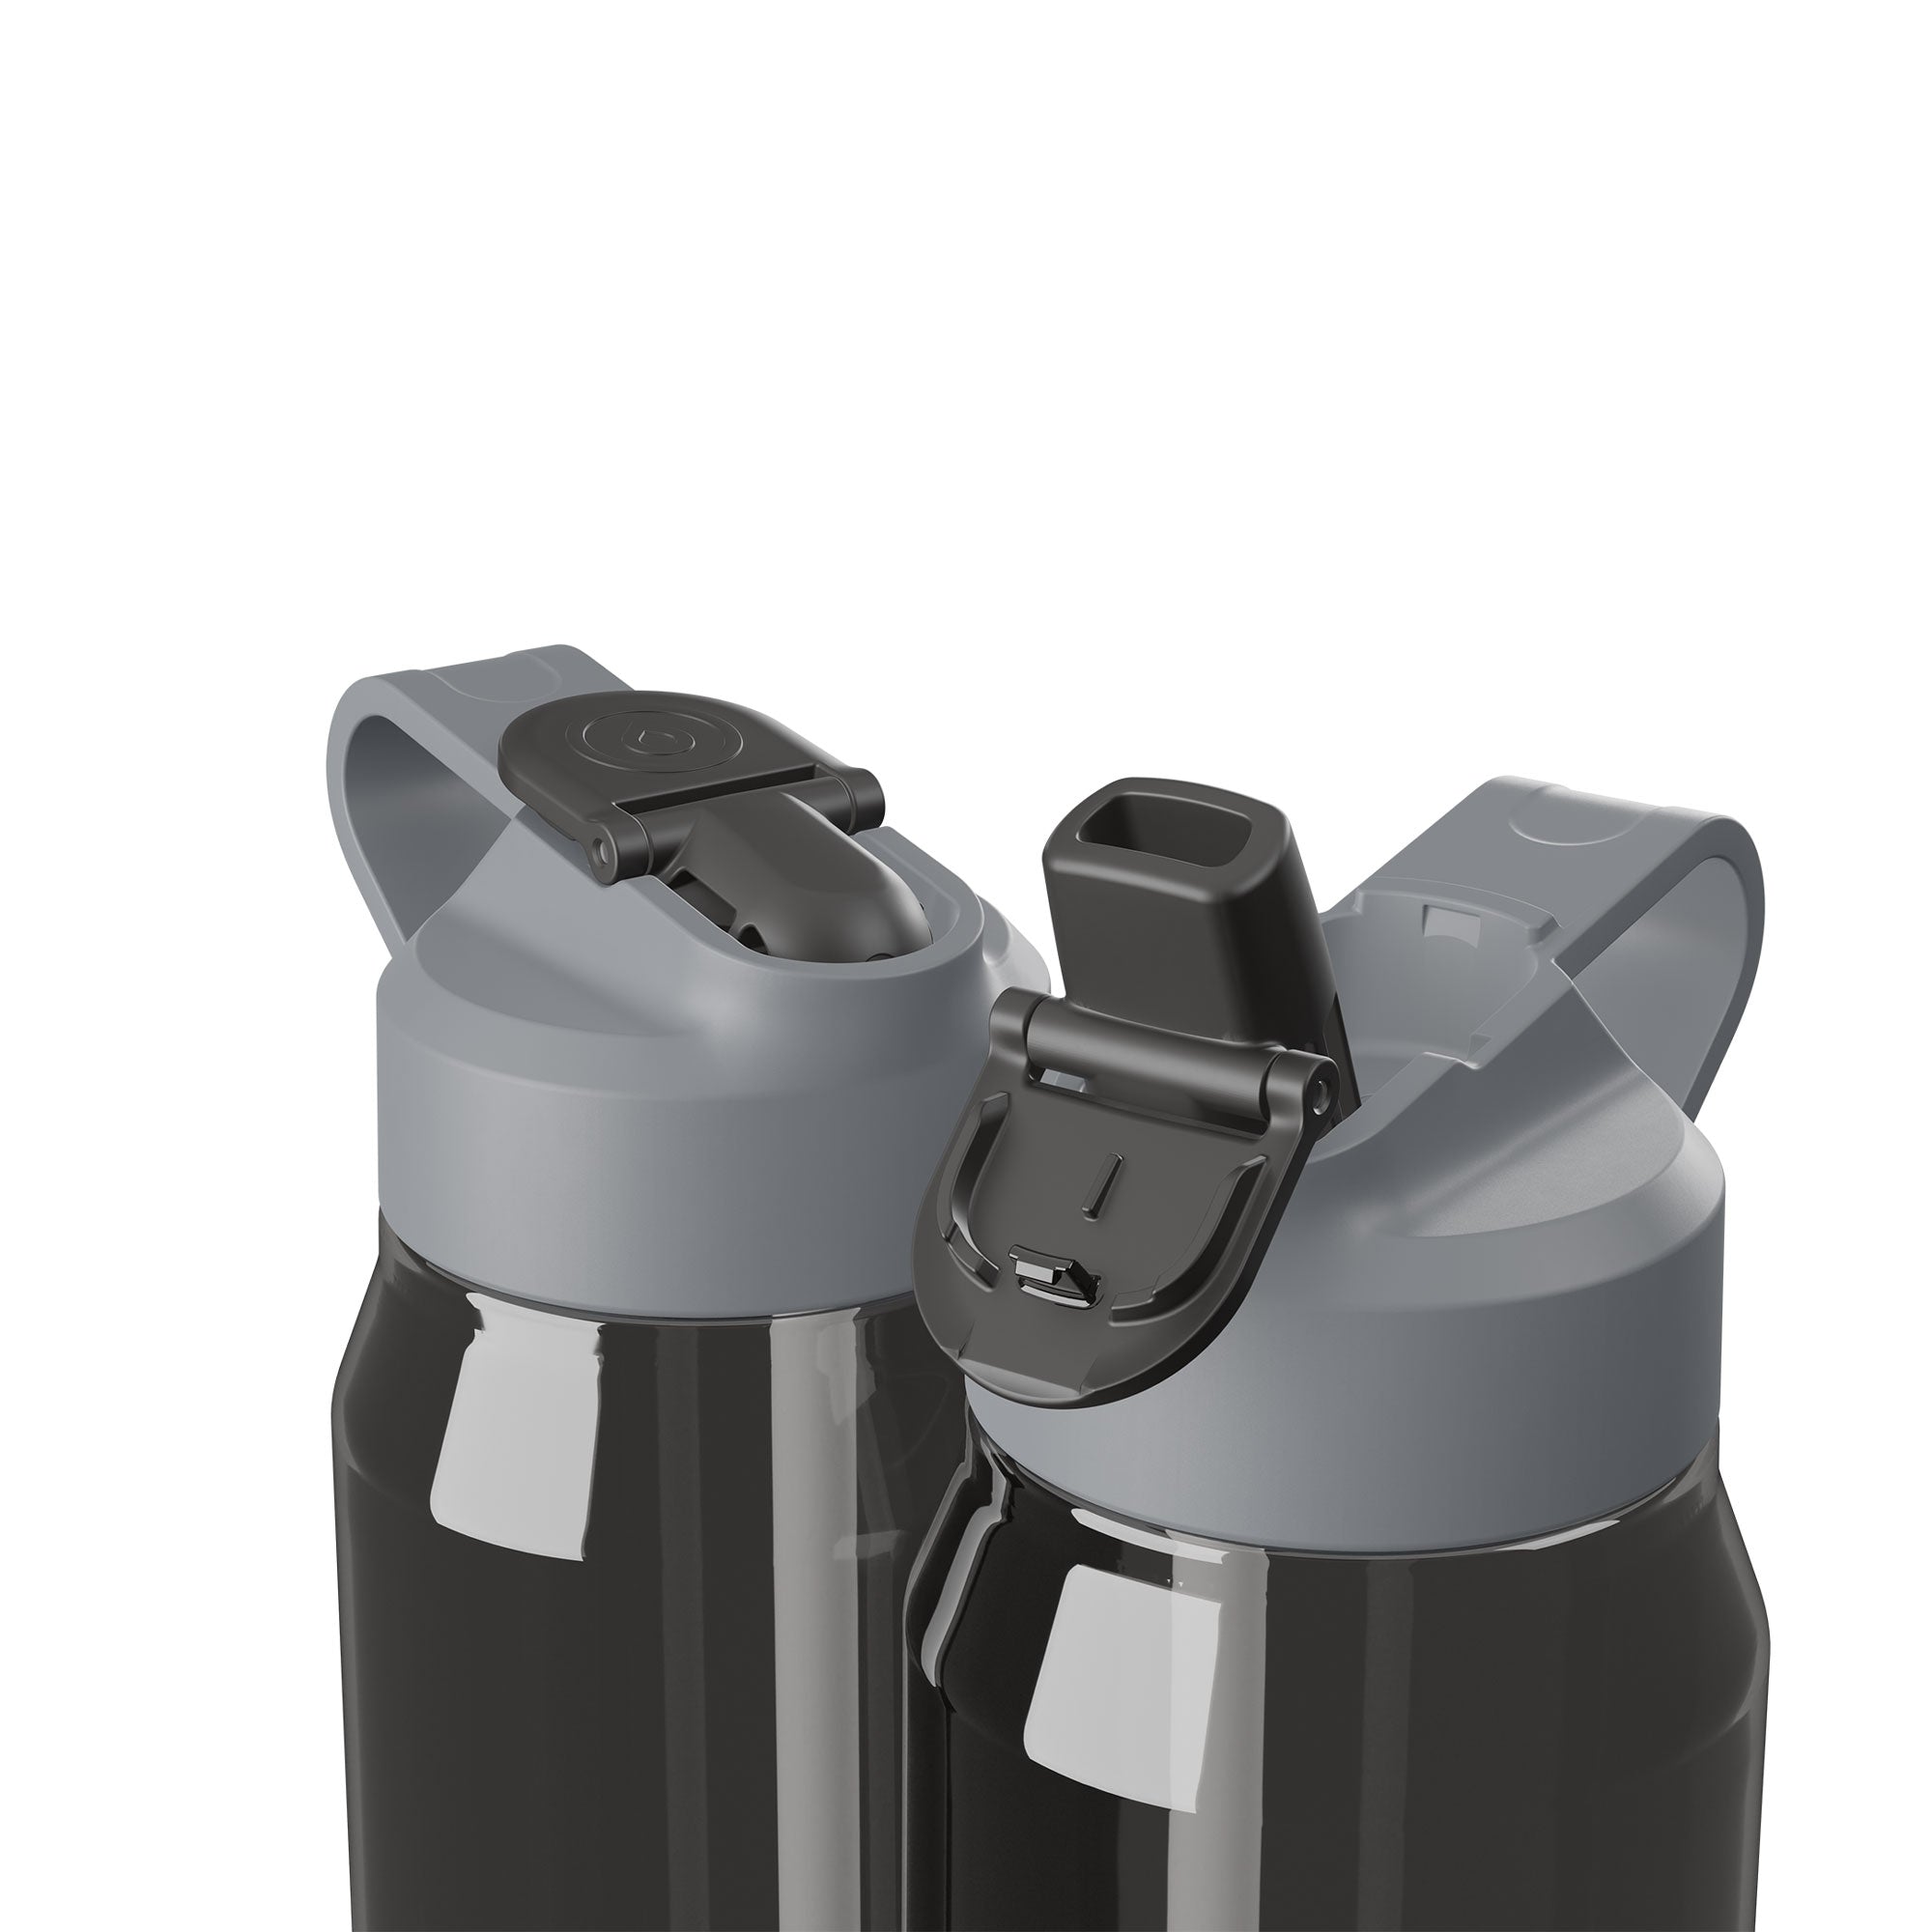 Promotional Water Bottles Jett Aluminum Straw Lid Hydration Bottle - 32 oz. QTY1 Sample